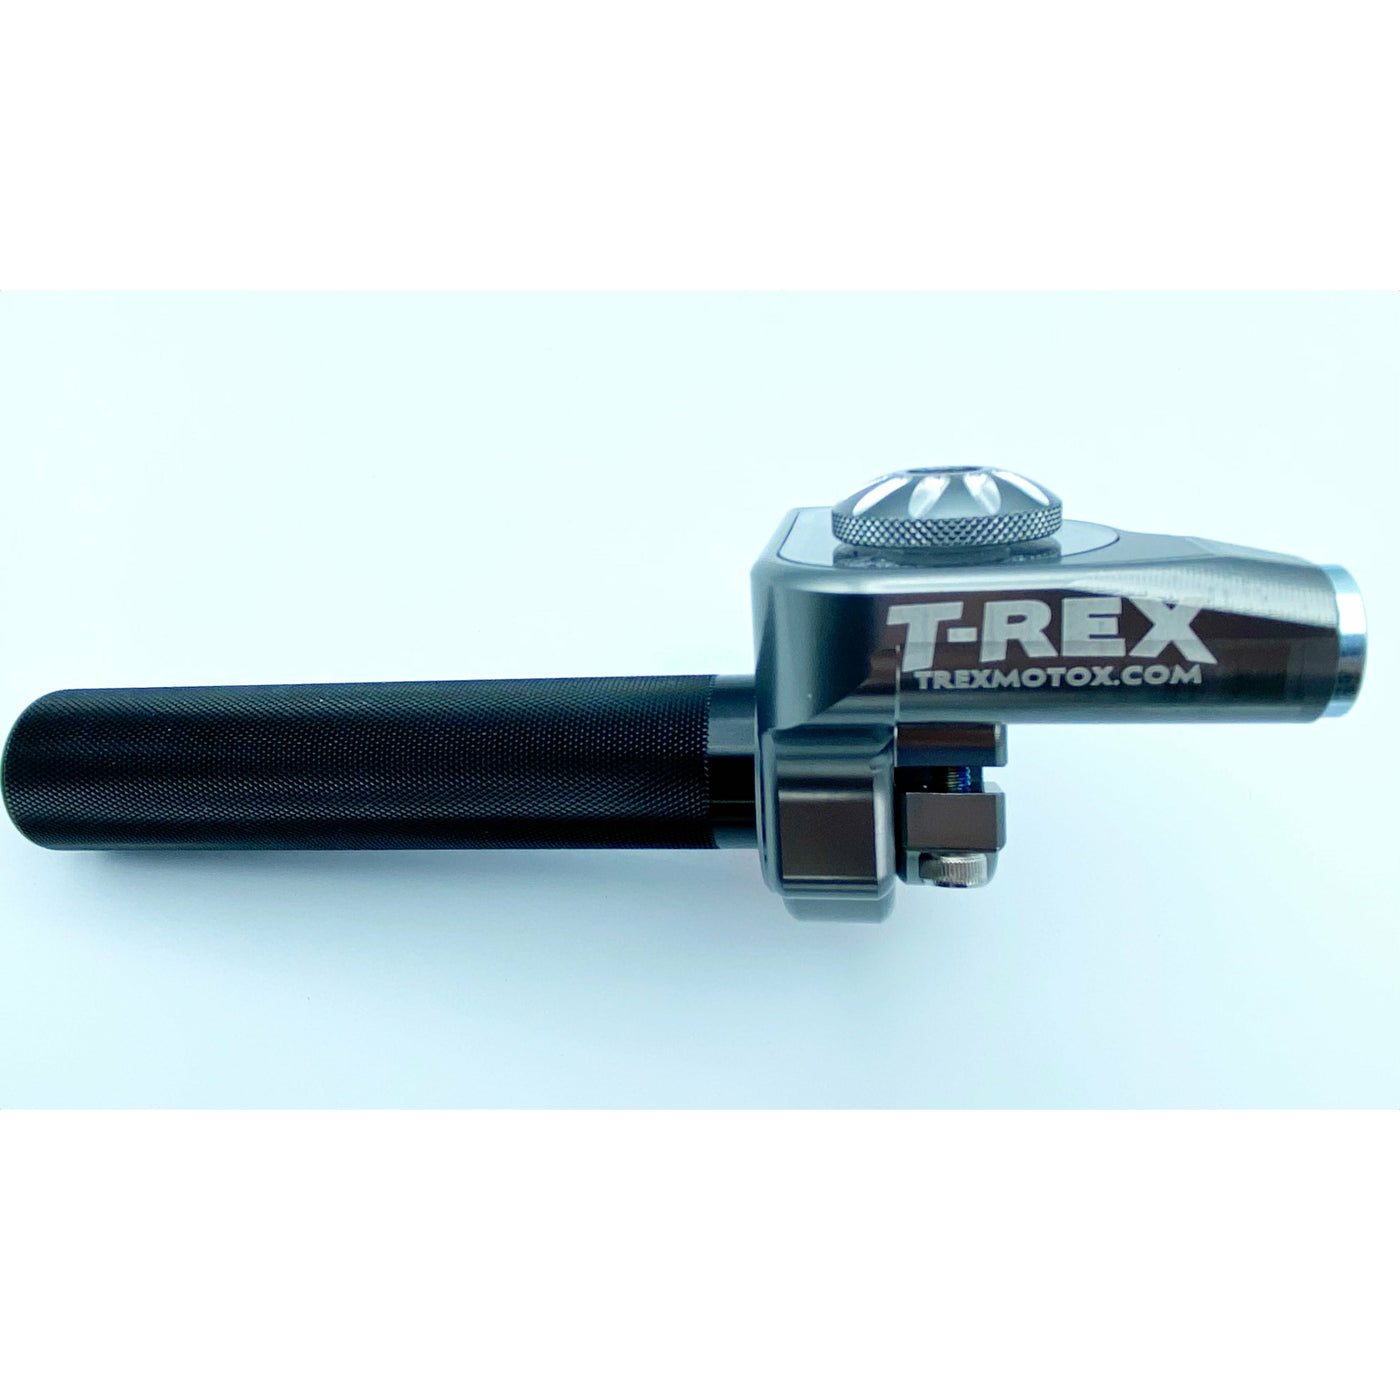 T-Rex Race Spec Billet Throttle KIT for Honda CRF 110 2019-current year